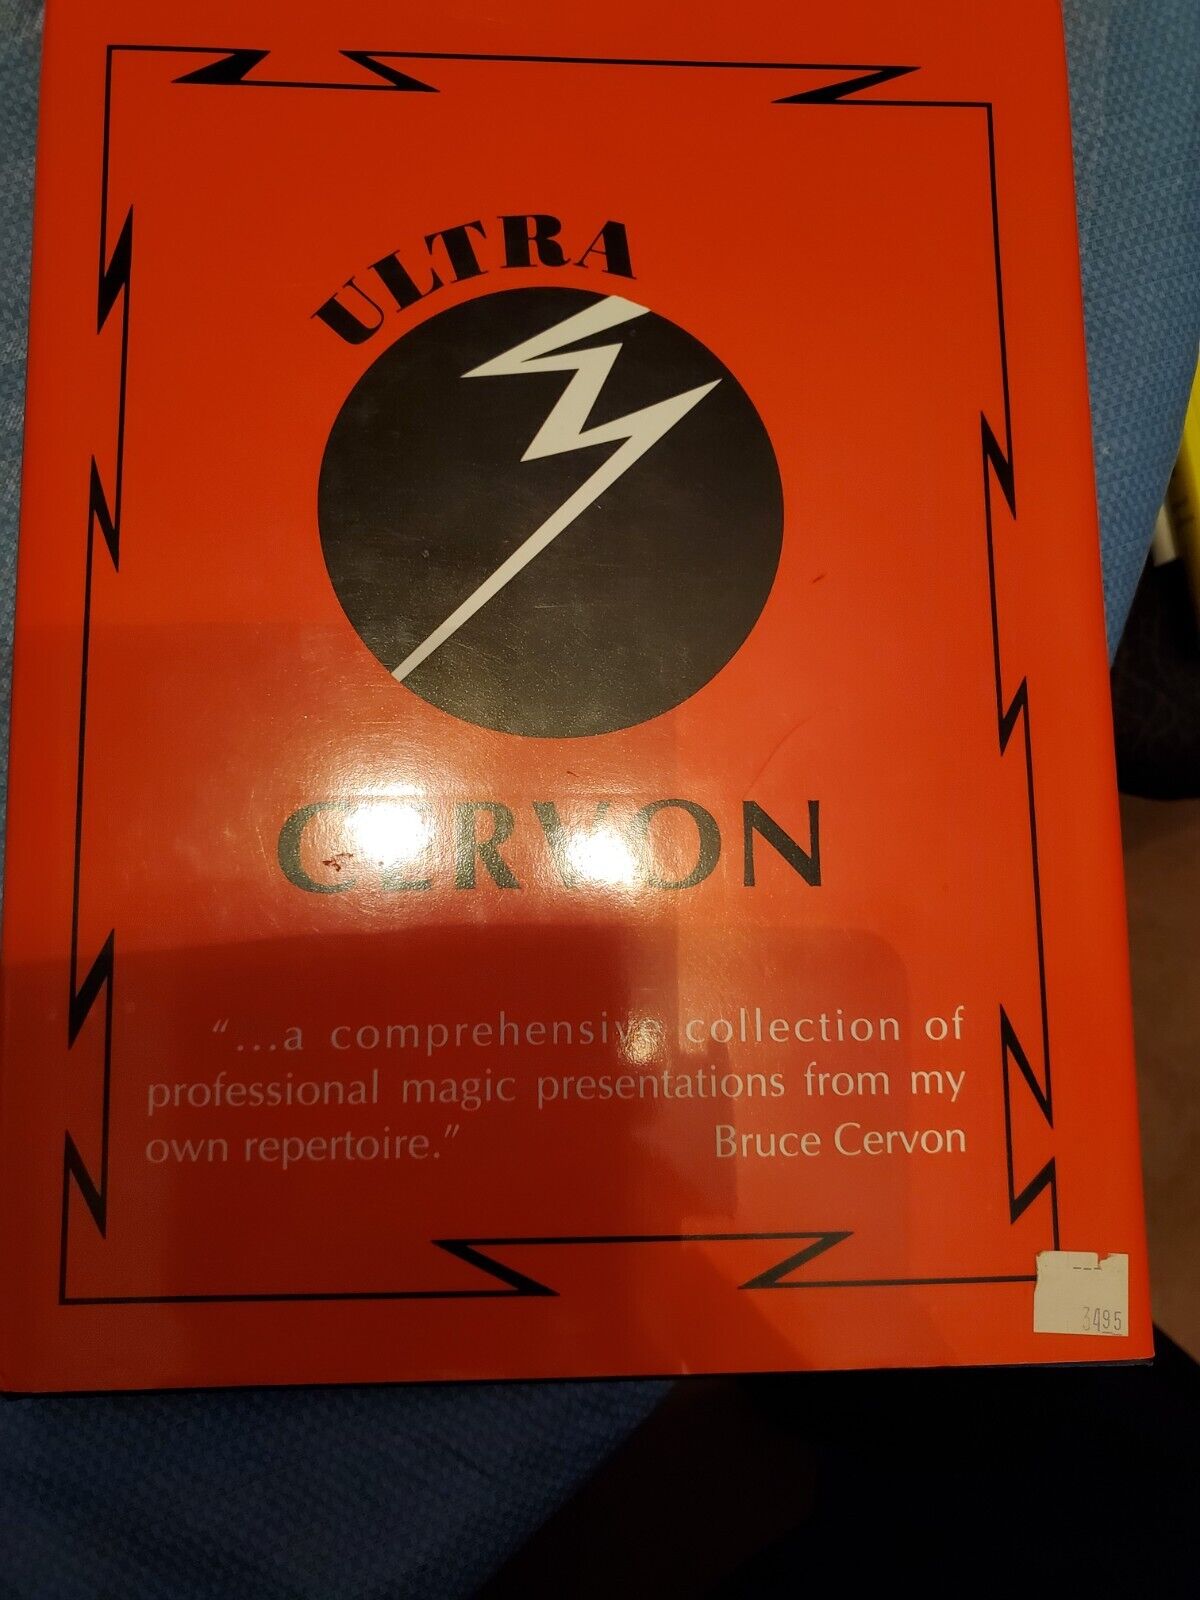 Ultra Cervon by Bruce Cervon and Stephen Minch